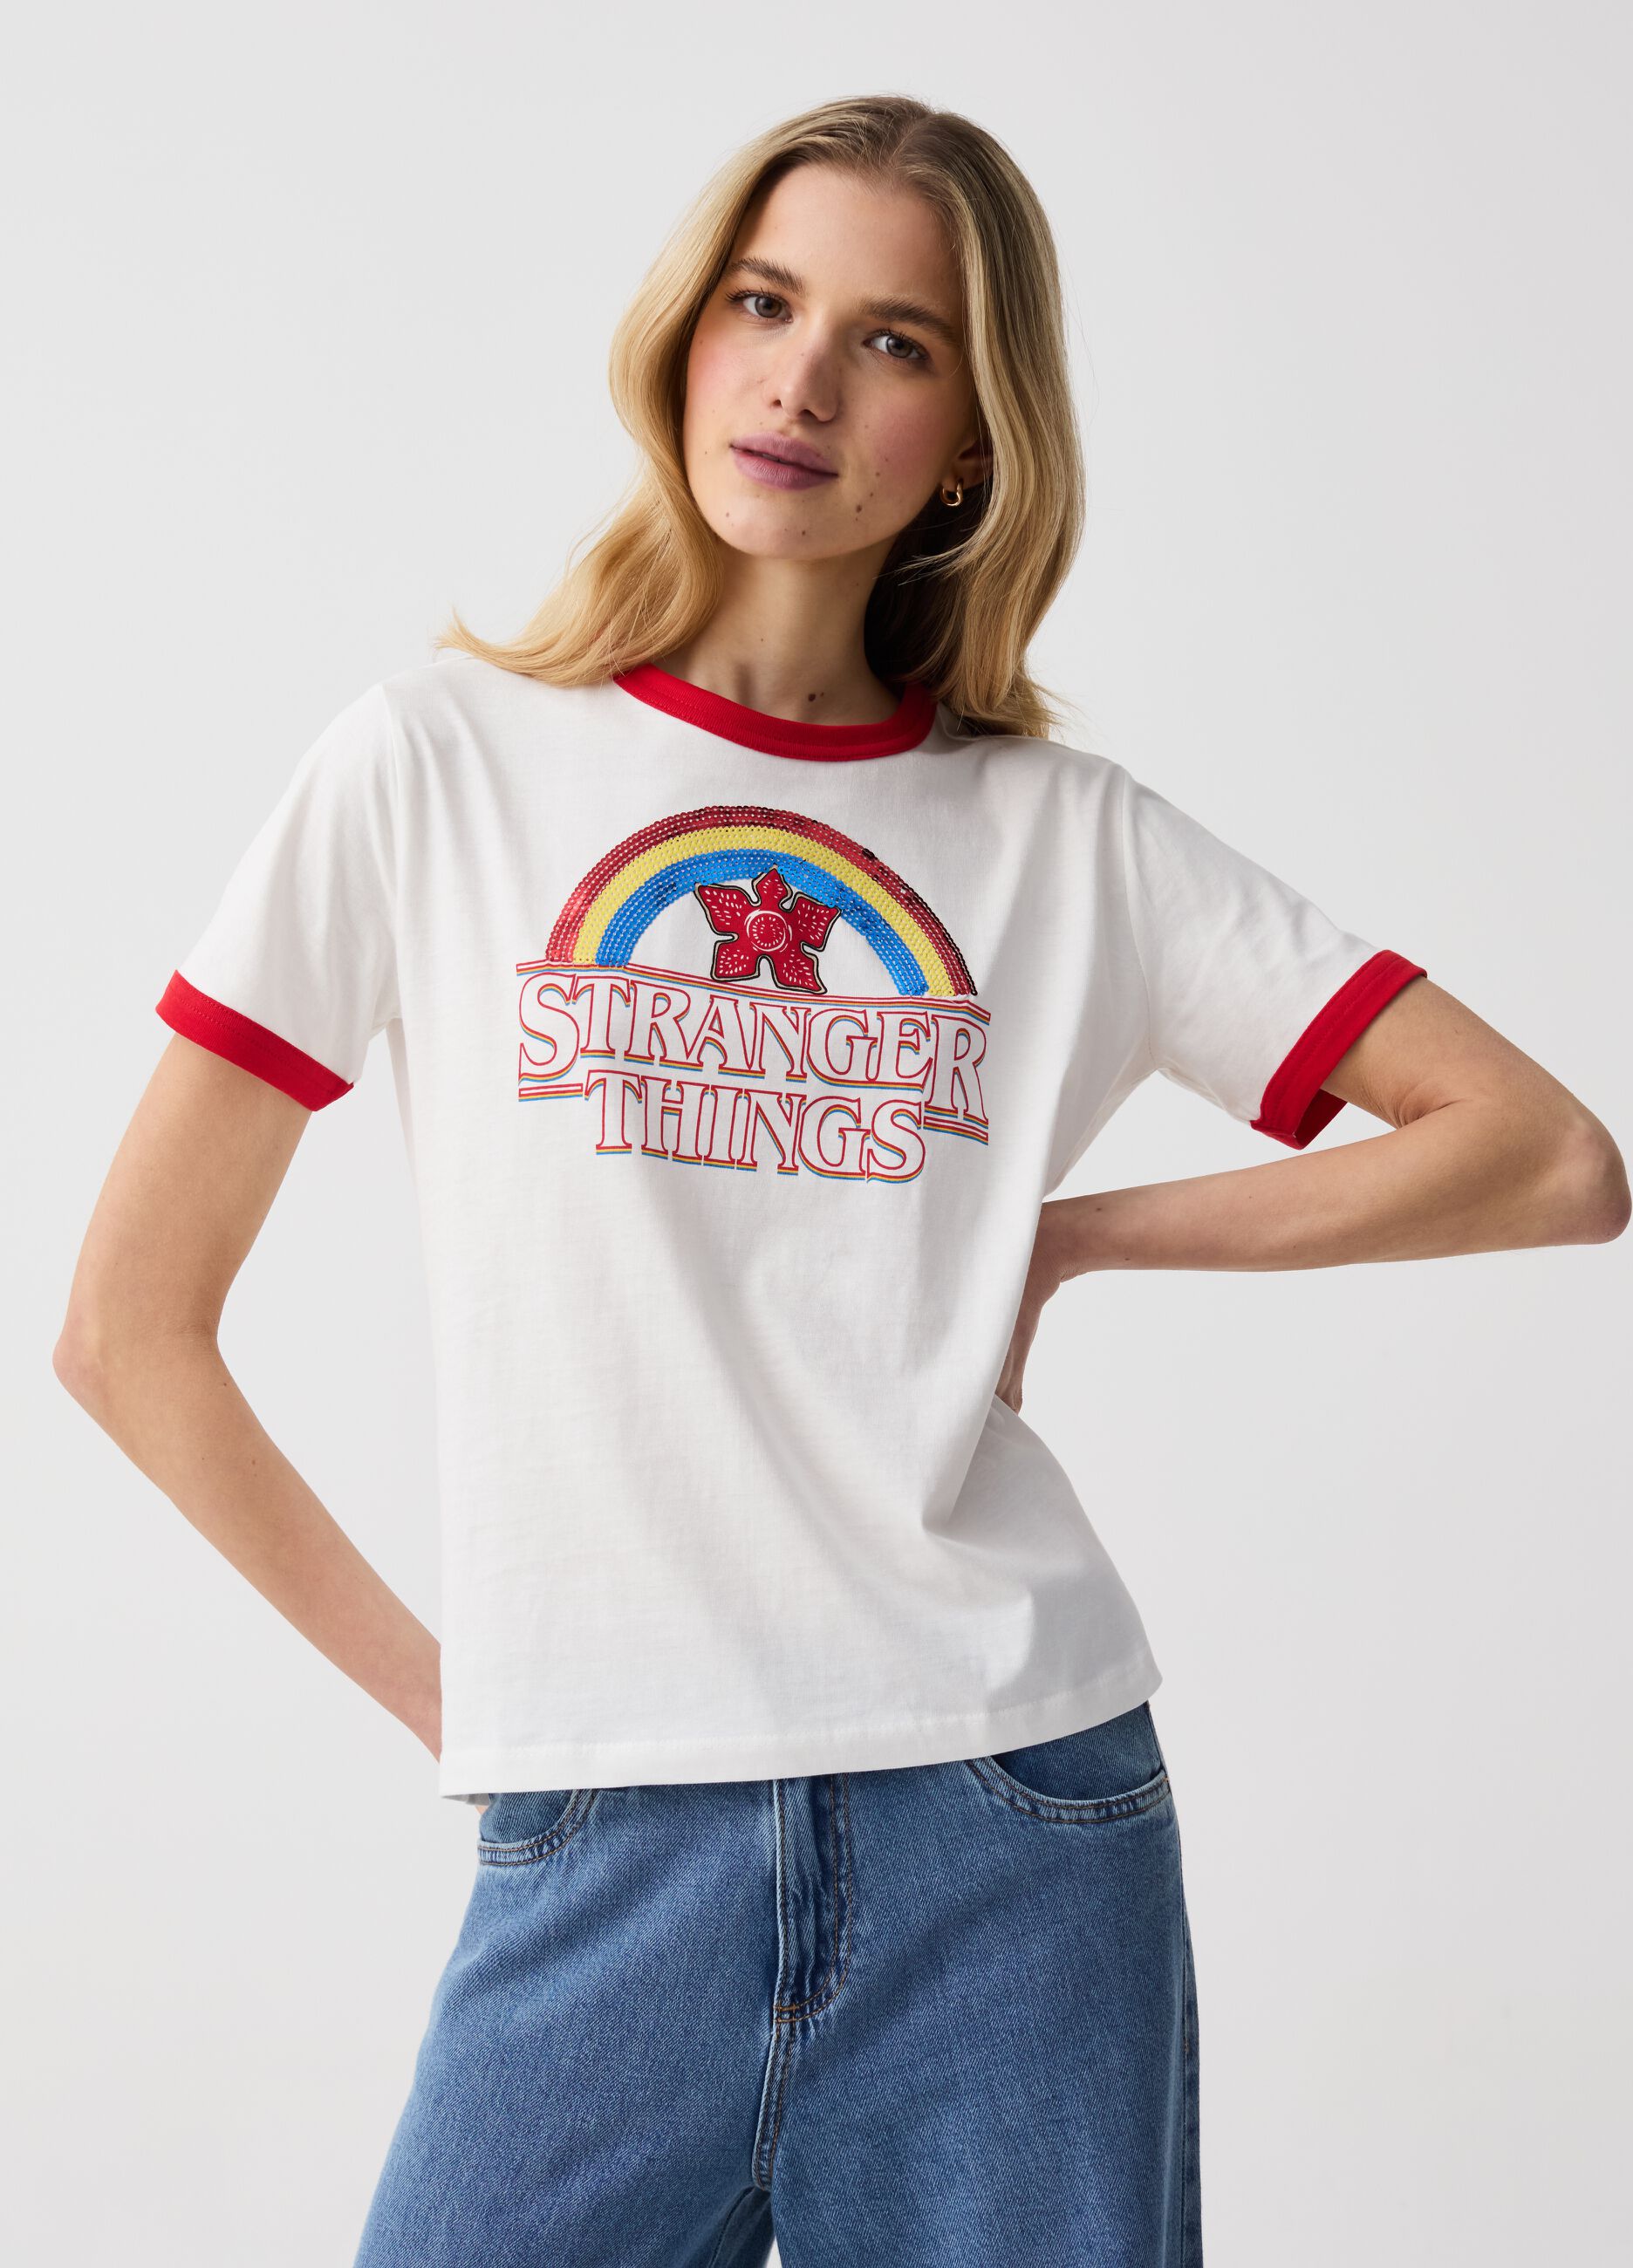 Camiseta estampado Stranger Things con lentejuelas